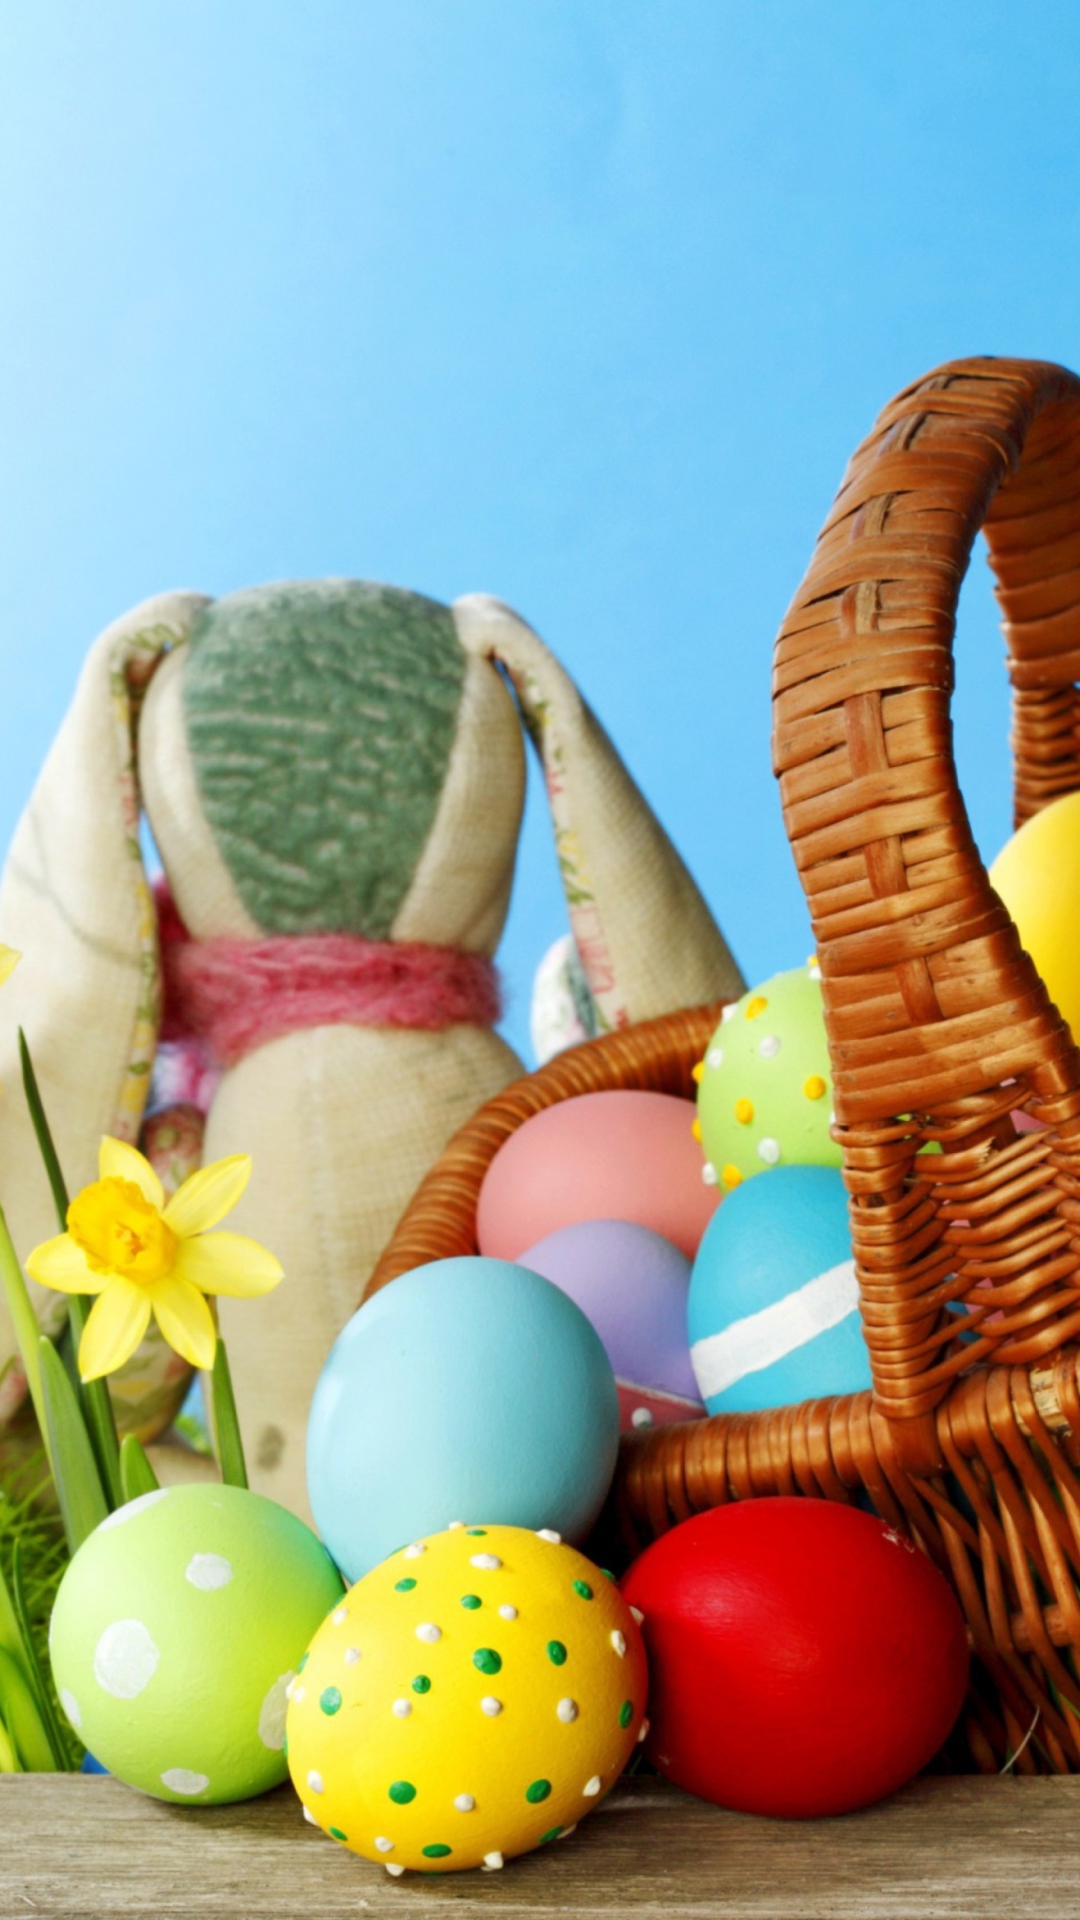 Обои Easter Eggs And Bunny 1080x1920